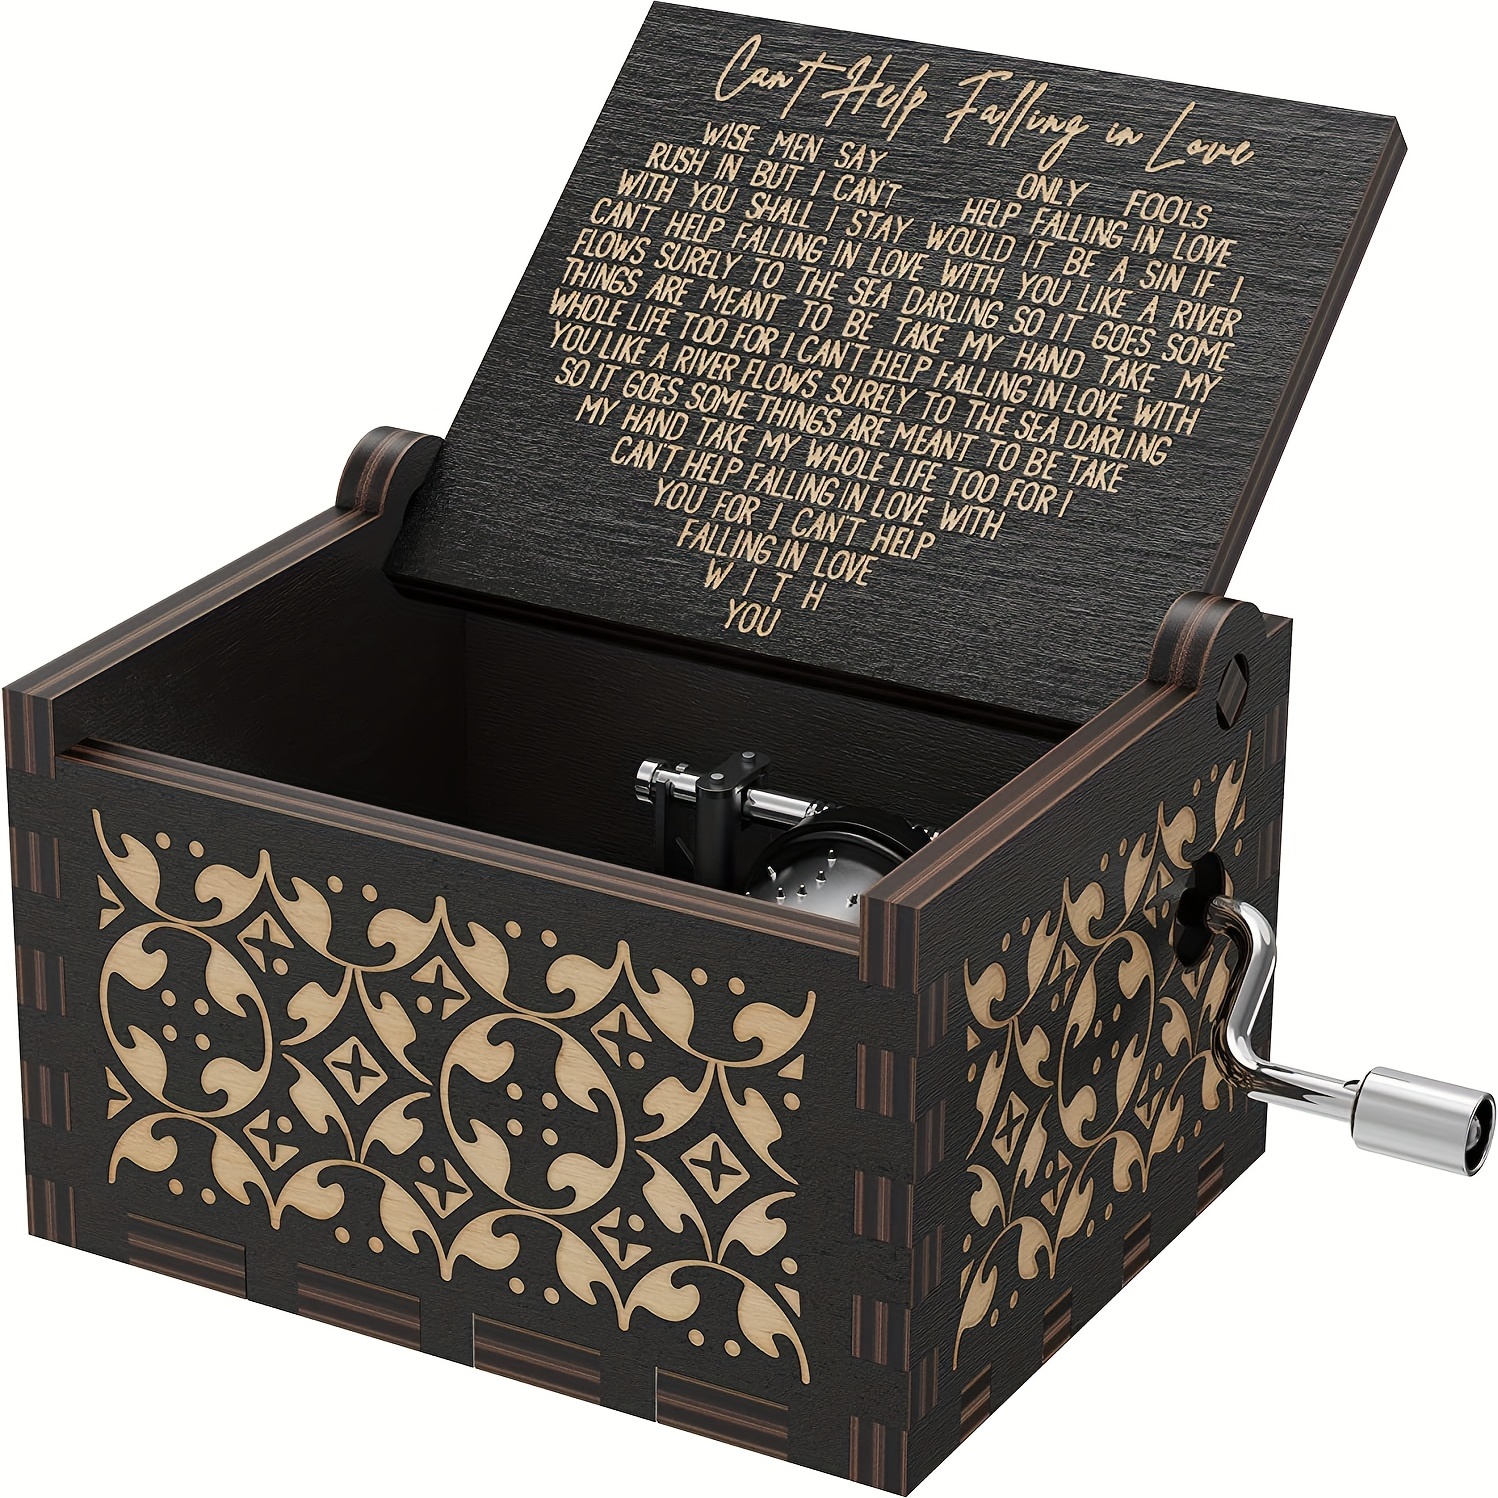 VUBU GIFTS Caja de música personalizada, personalizada con tu foto y texto,  caja de música de manivela de madera, grabado vintage, color negro